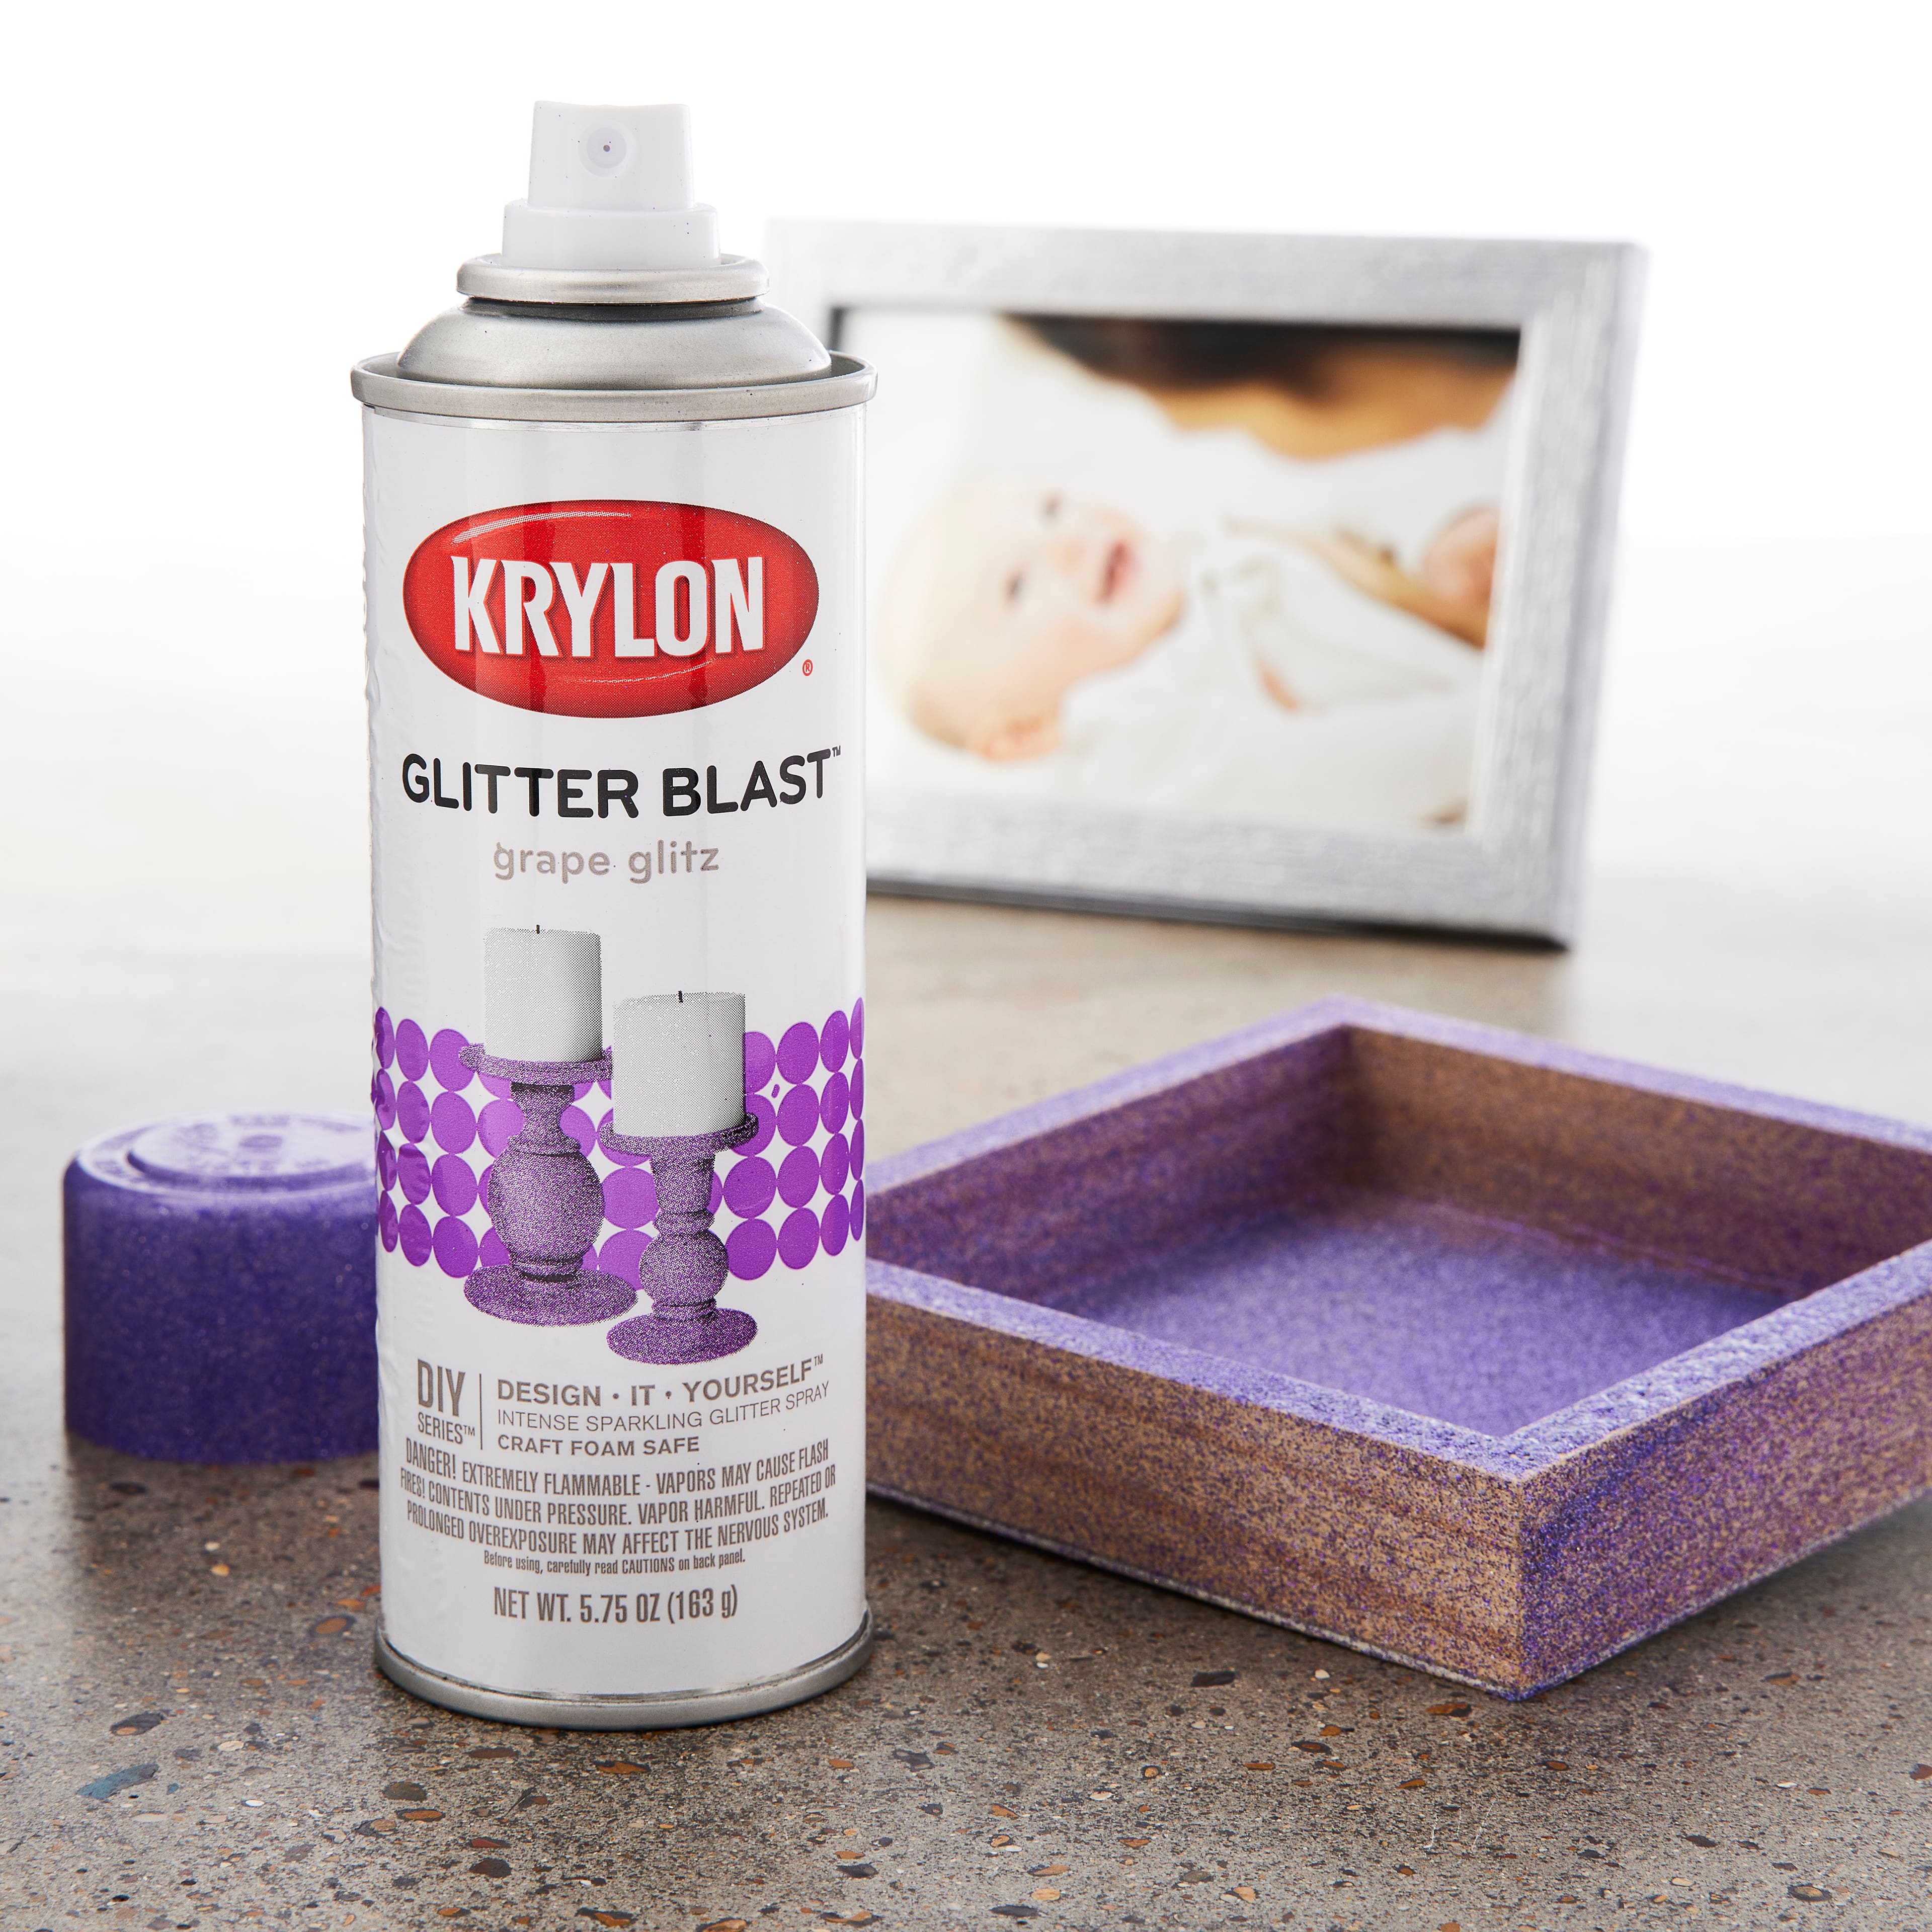  Krylon Glitter Blast Glitter Spray Paint for Craft Projects,  Orange Burst, 5.75 oz : Arts, Crafts & Sewing